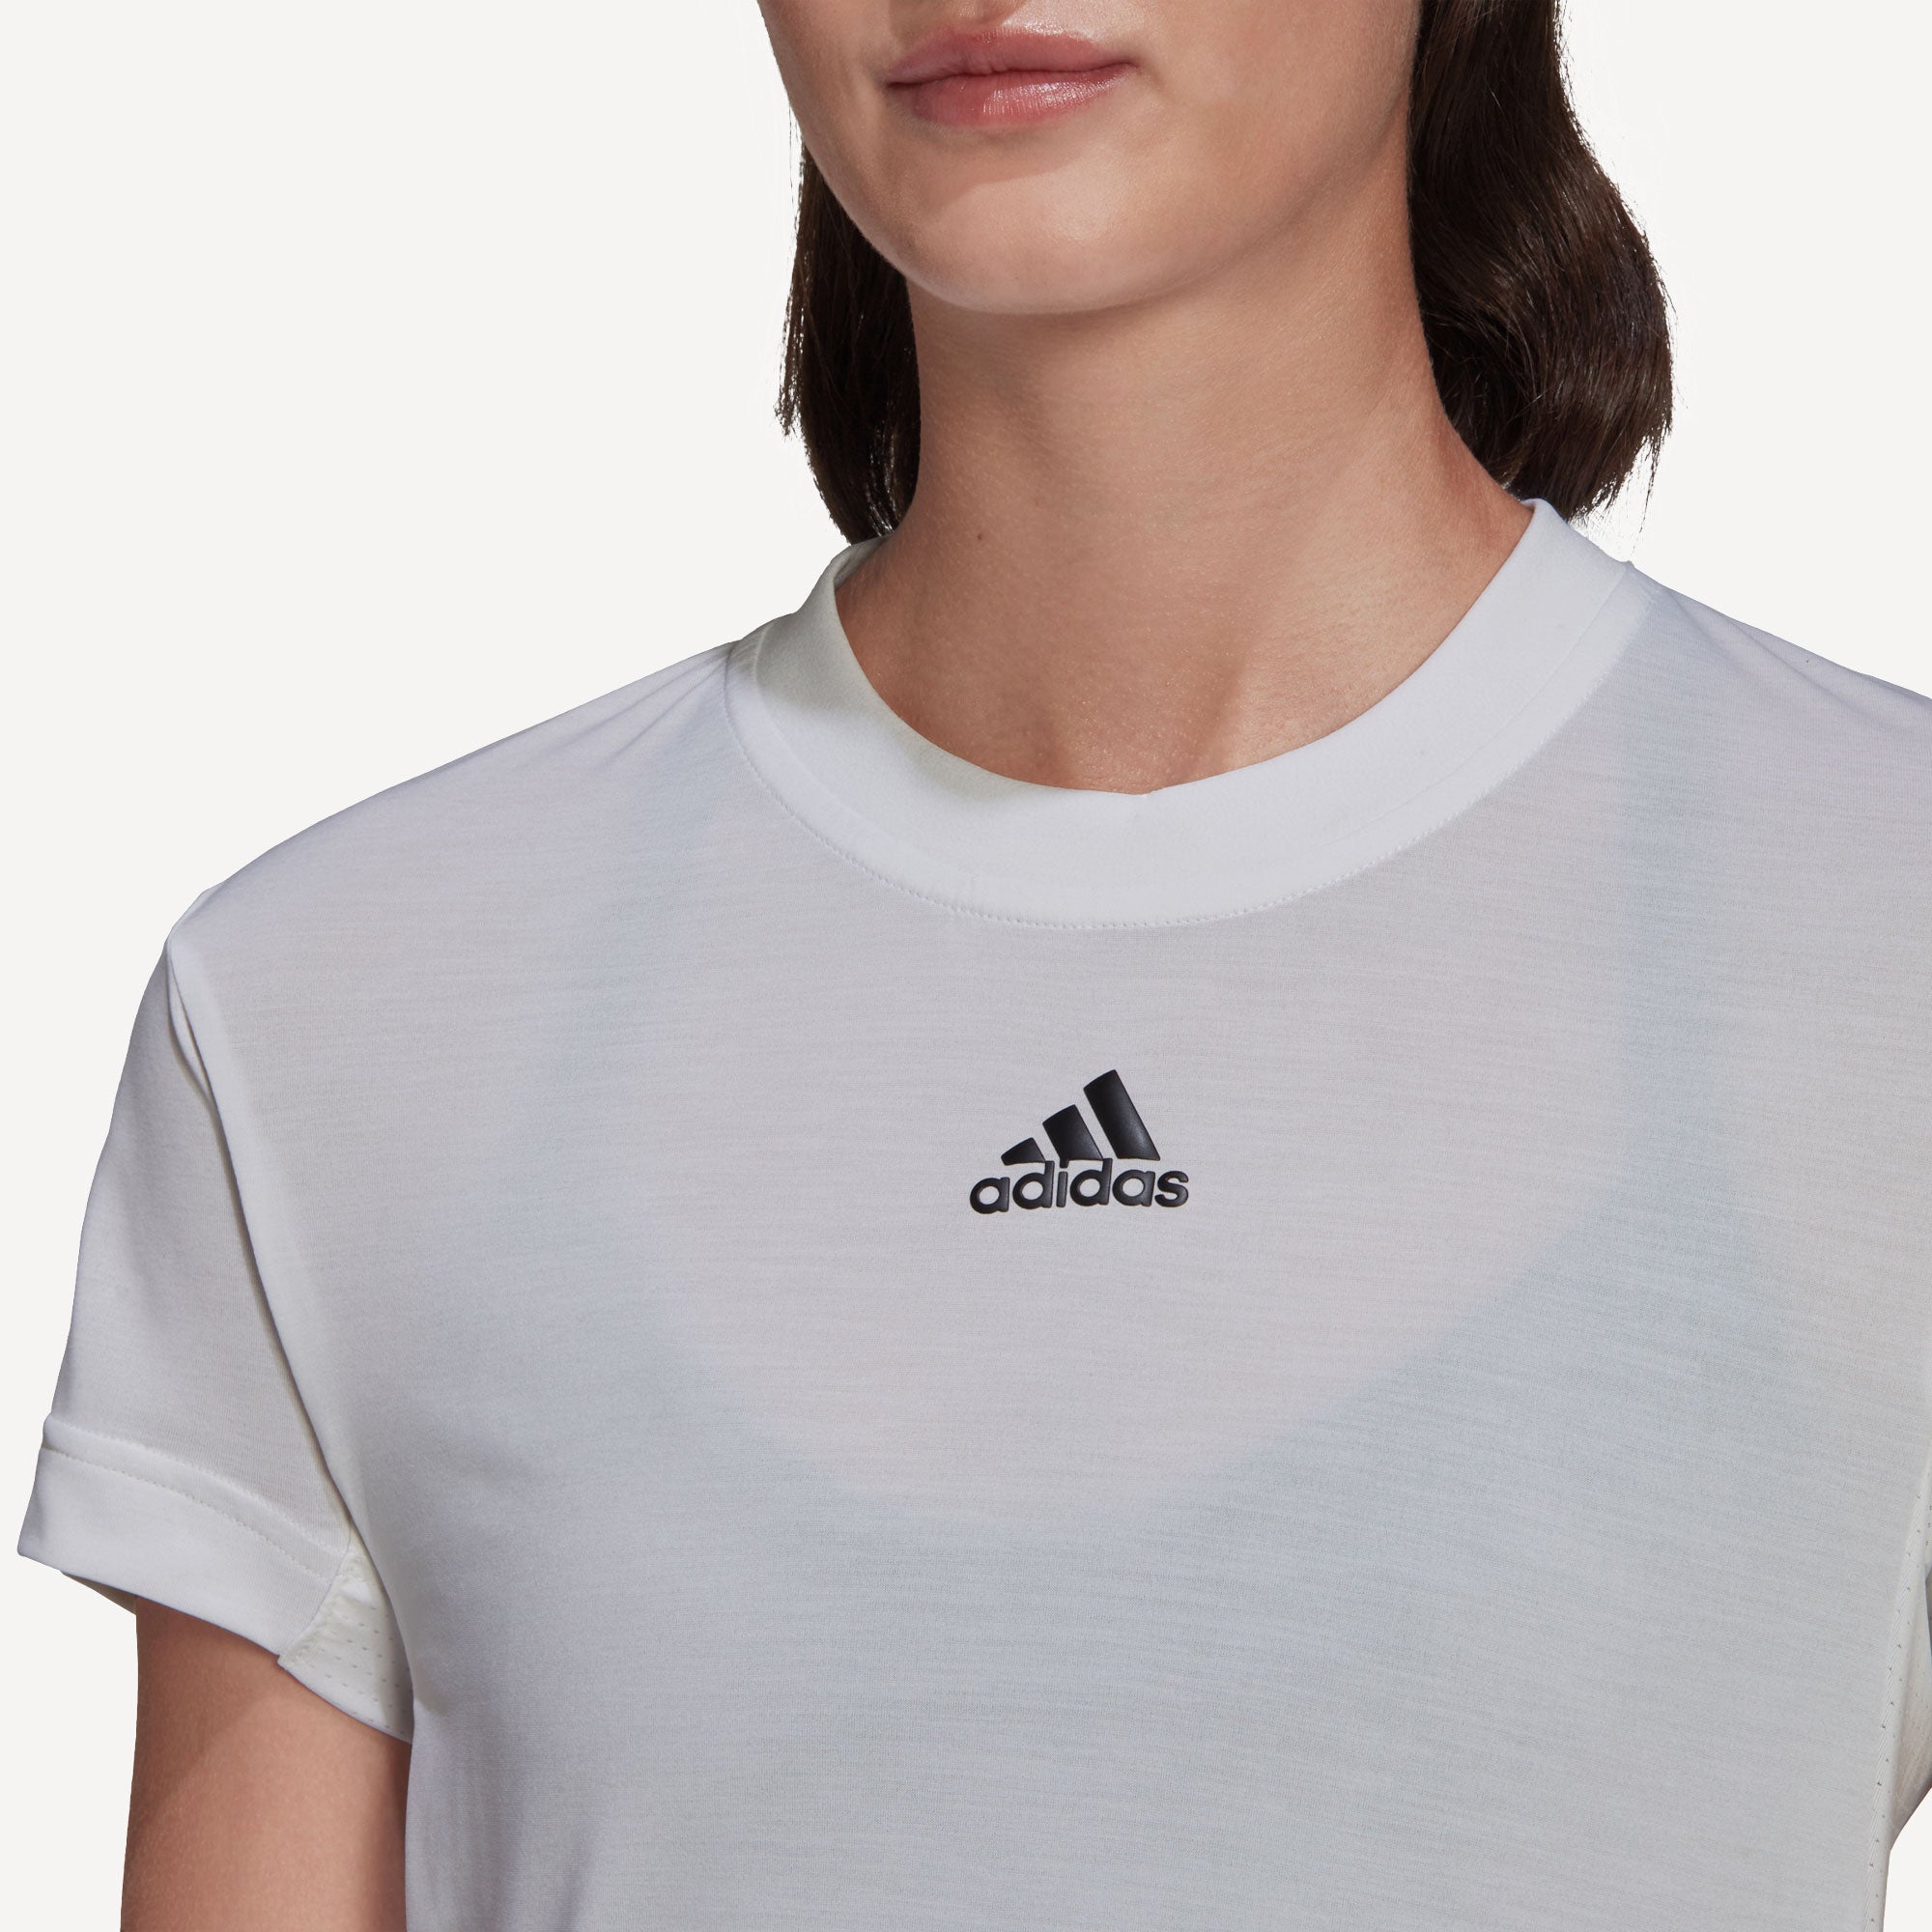 adidas Match Women's Tennis Shirt White (5)